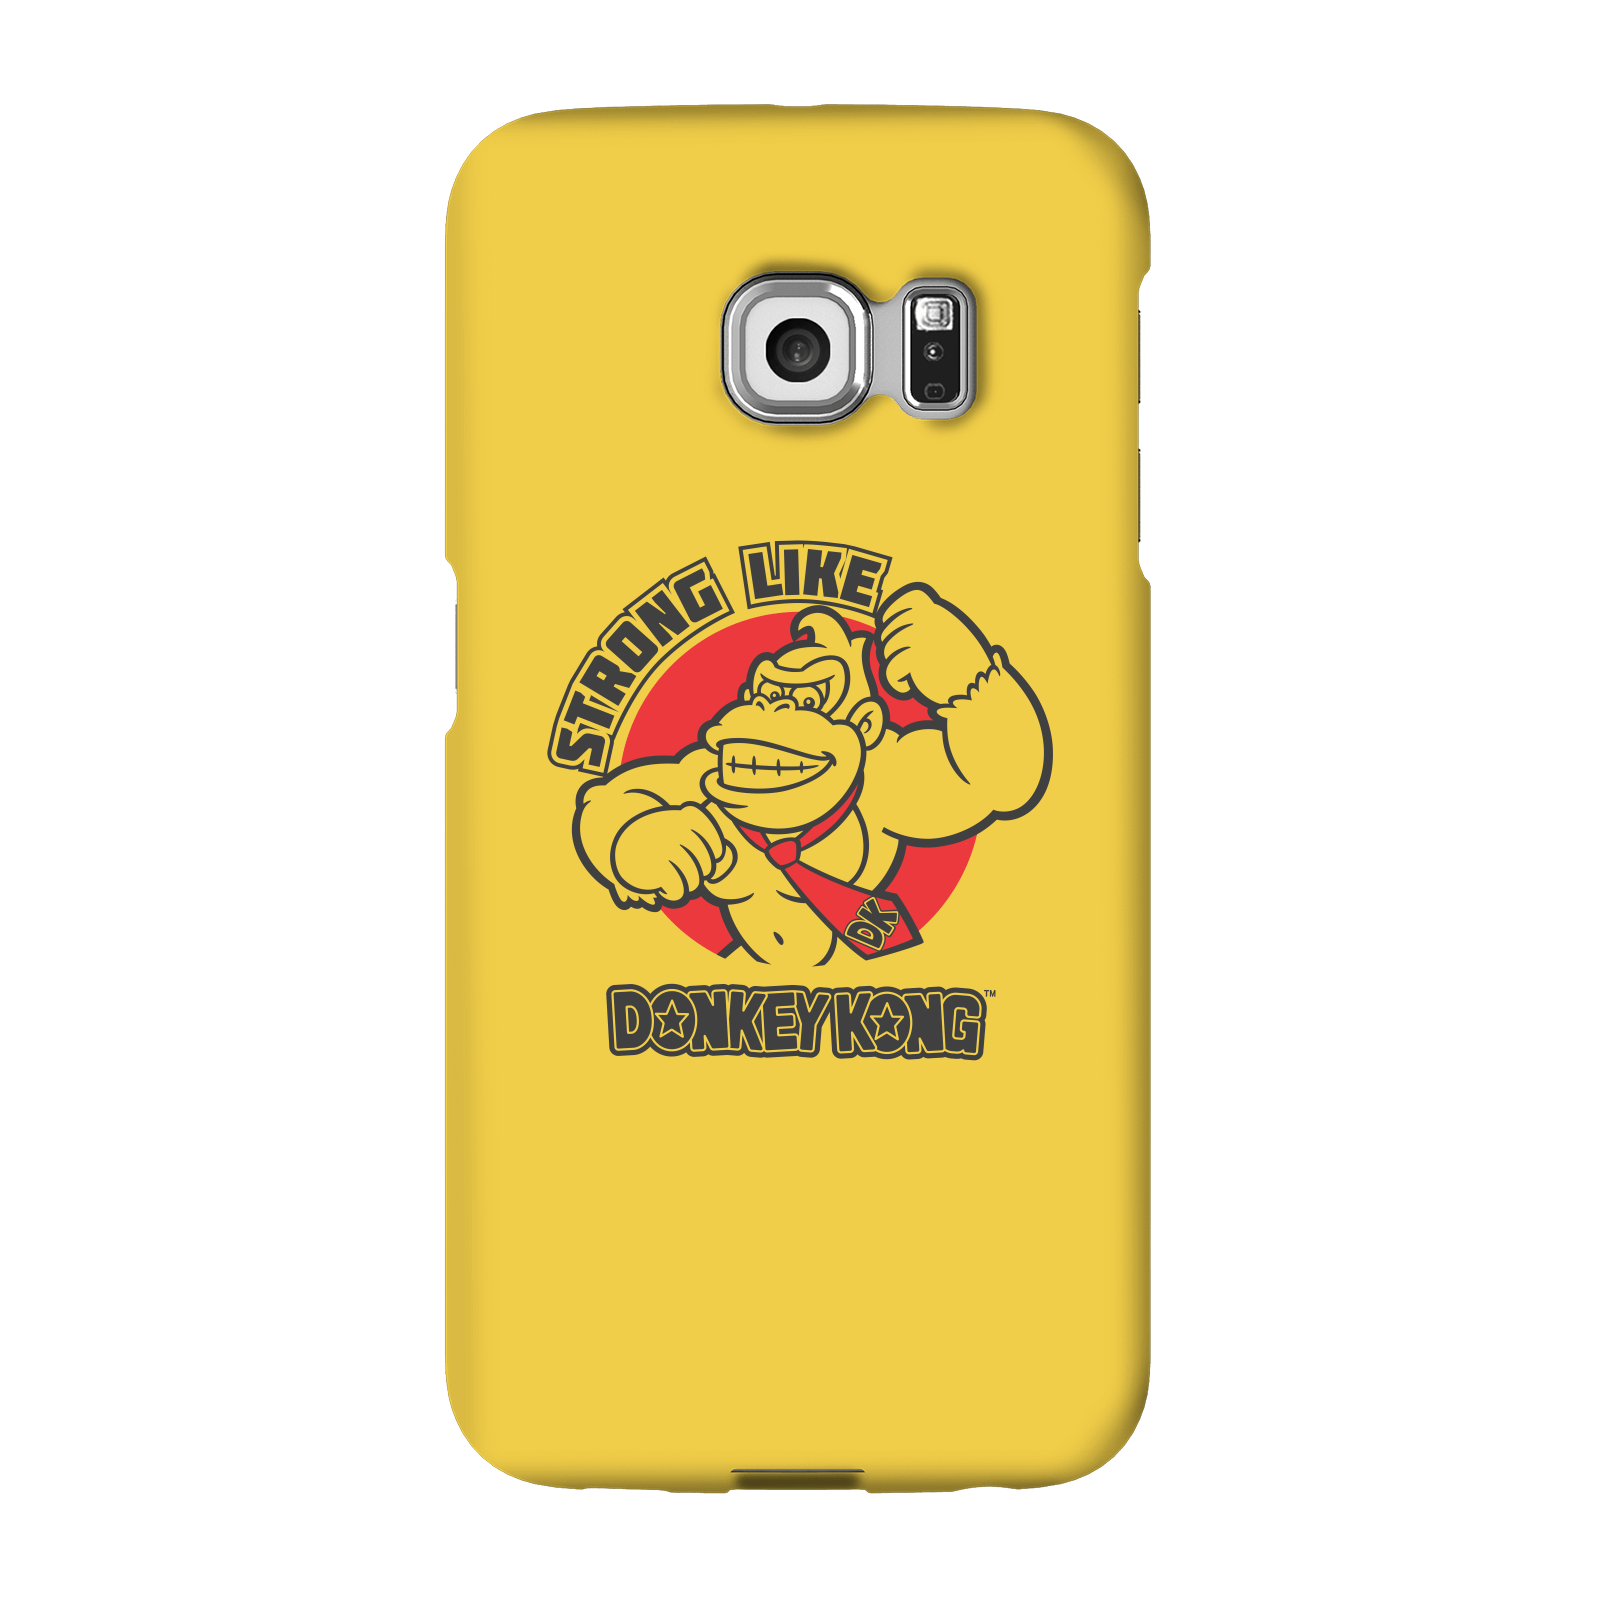 Nintendo Donkey Kong Strong Like Donkey Kong Phone Case - Samsung S6 Edge Plus - Snap Case - Gloss